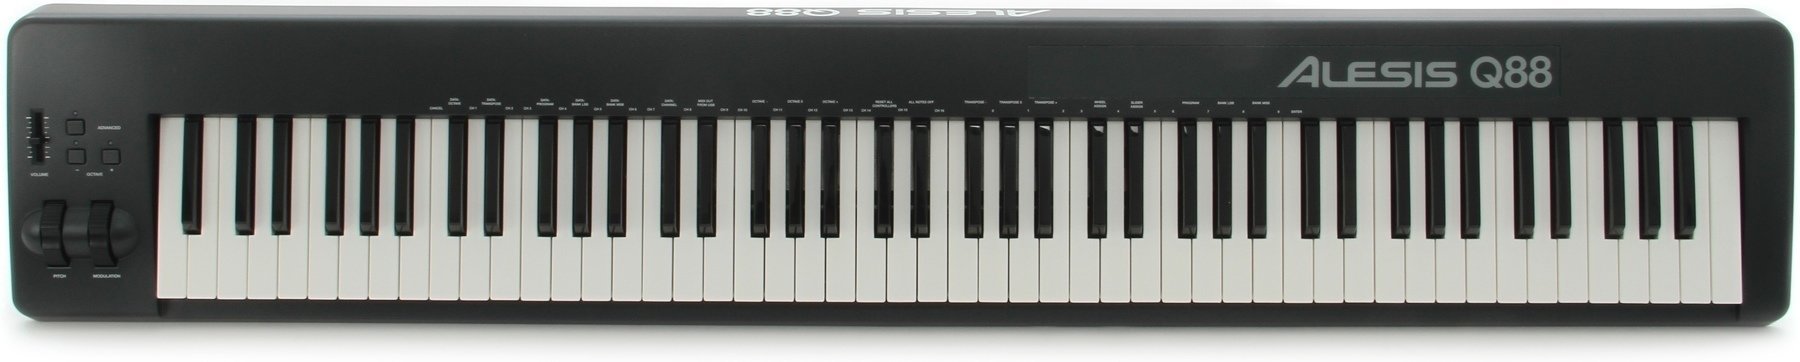 MIDI keyboard Alesis Q88 USB/MIDI Keyboard Controller